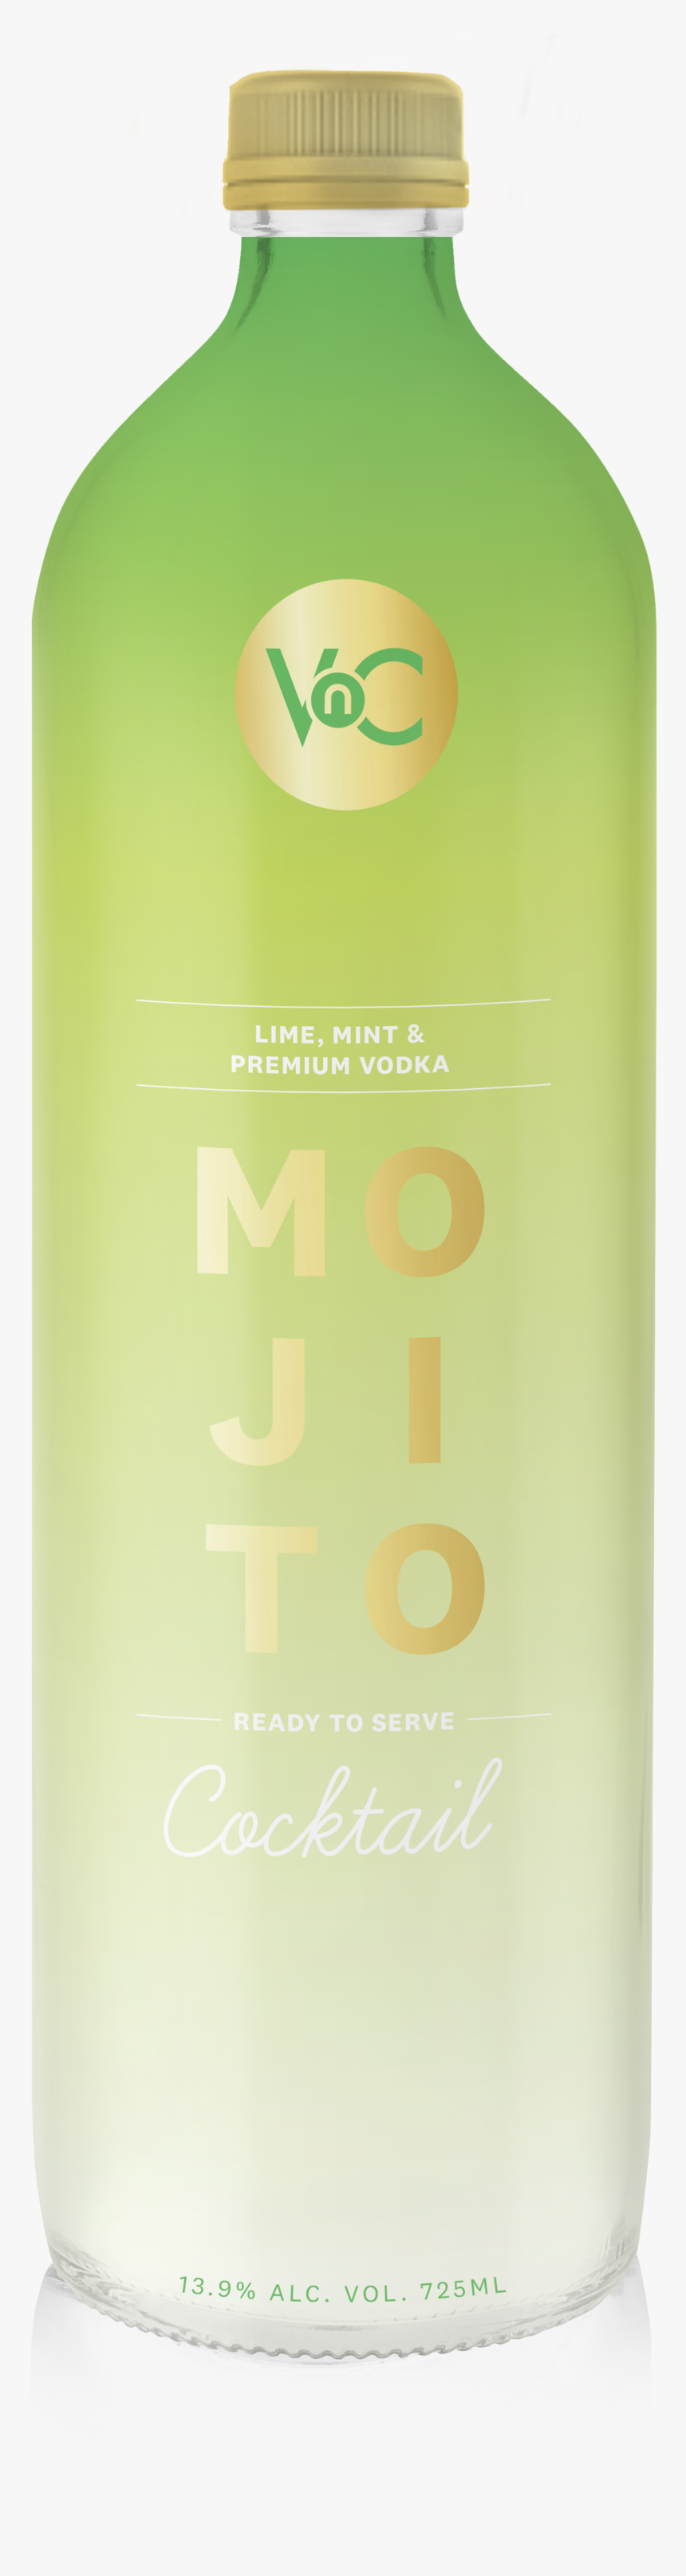 725ml Mojito Cc - Vnc Cocktail Mojito, HD Png Download, Free Download